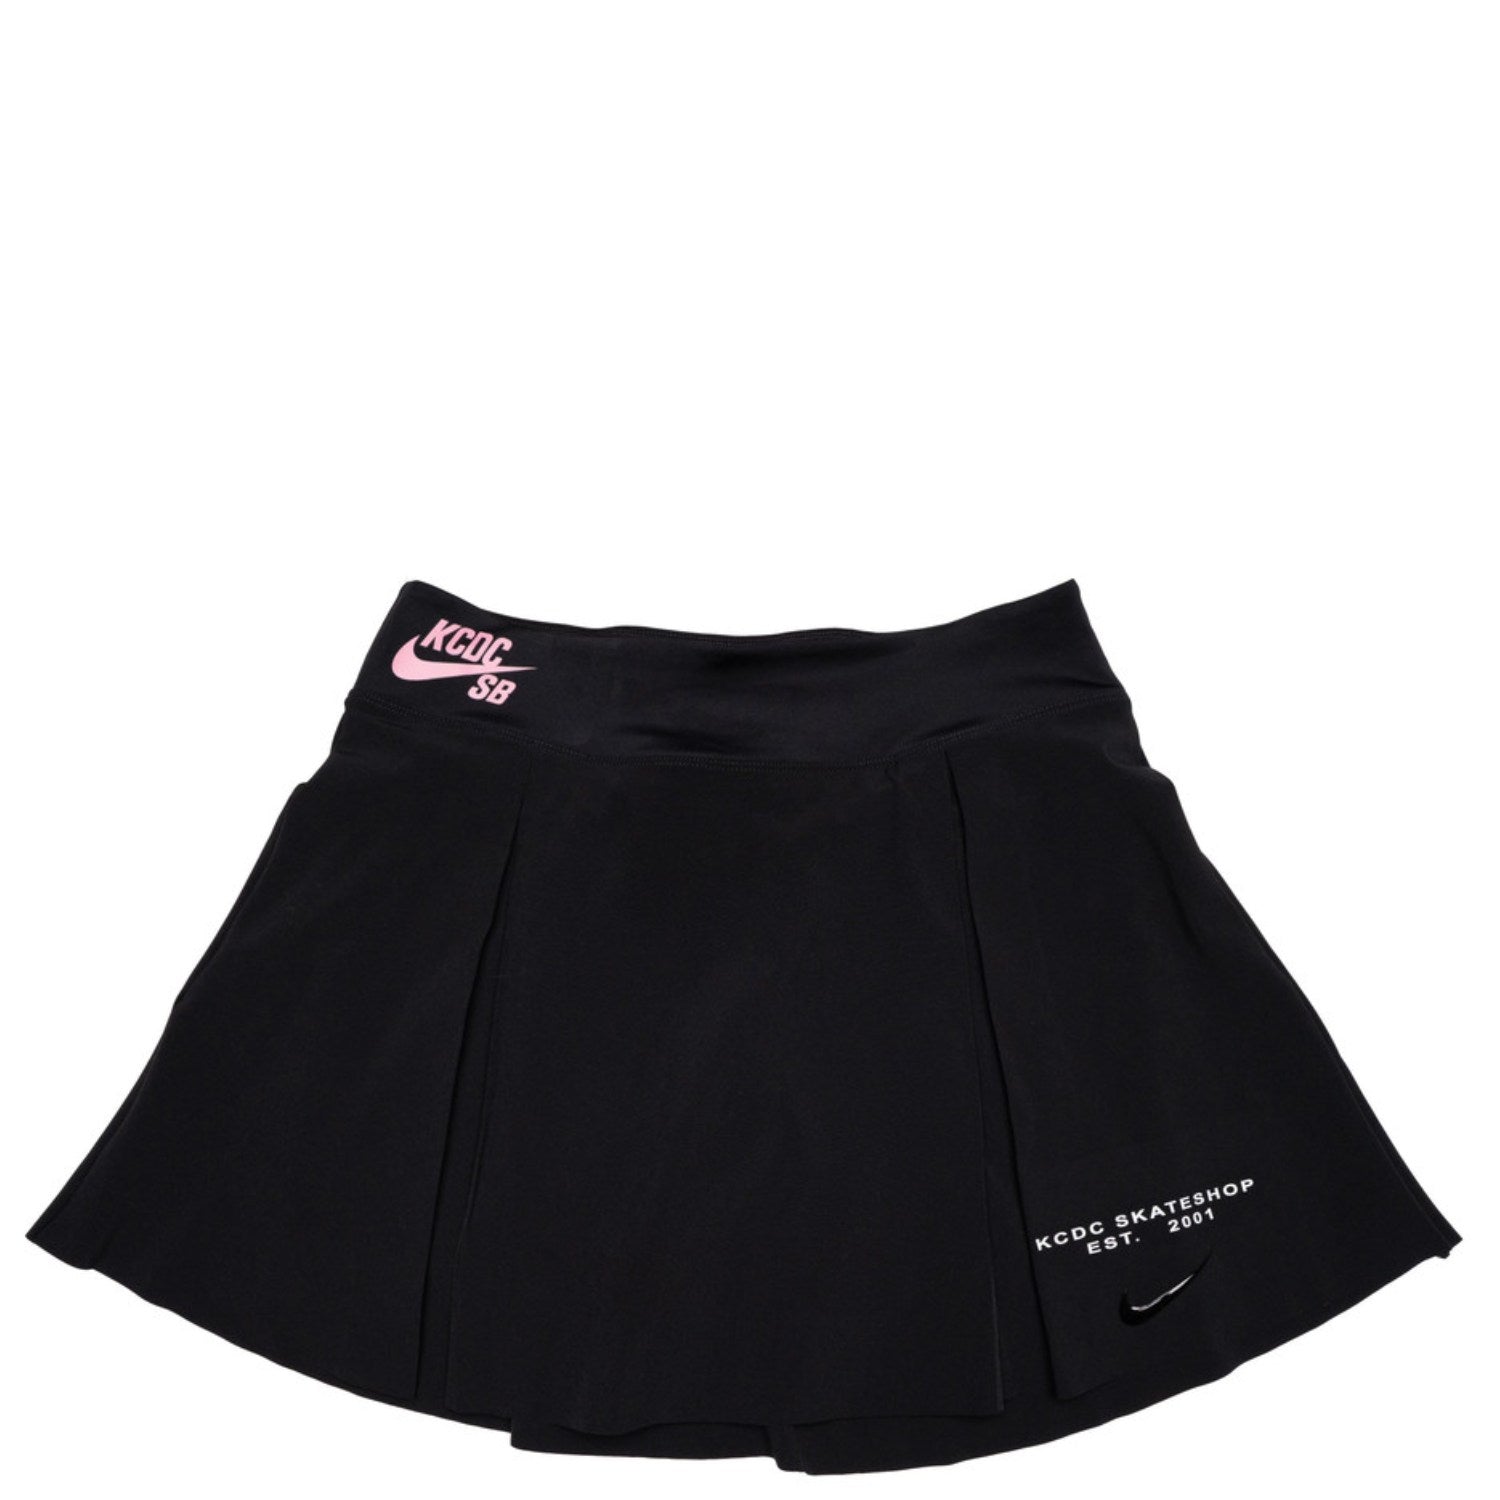  KCDC X NIKE Tennis Skirt - Black